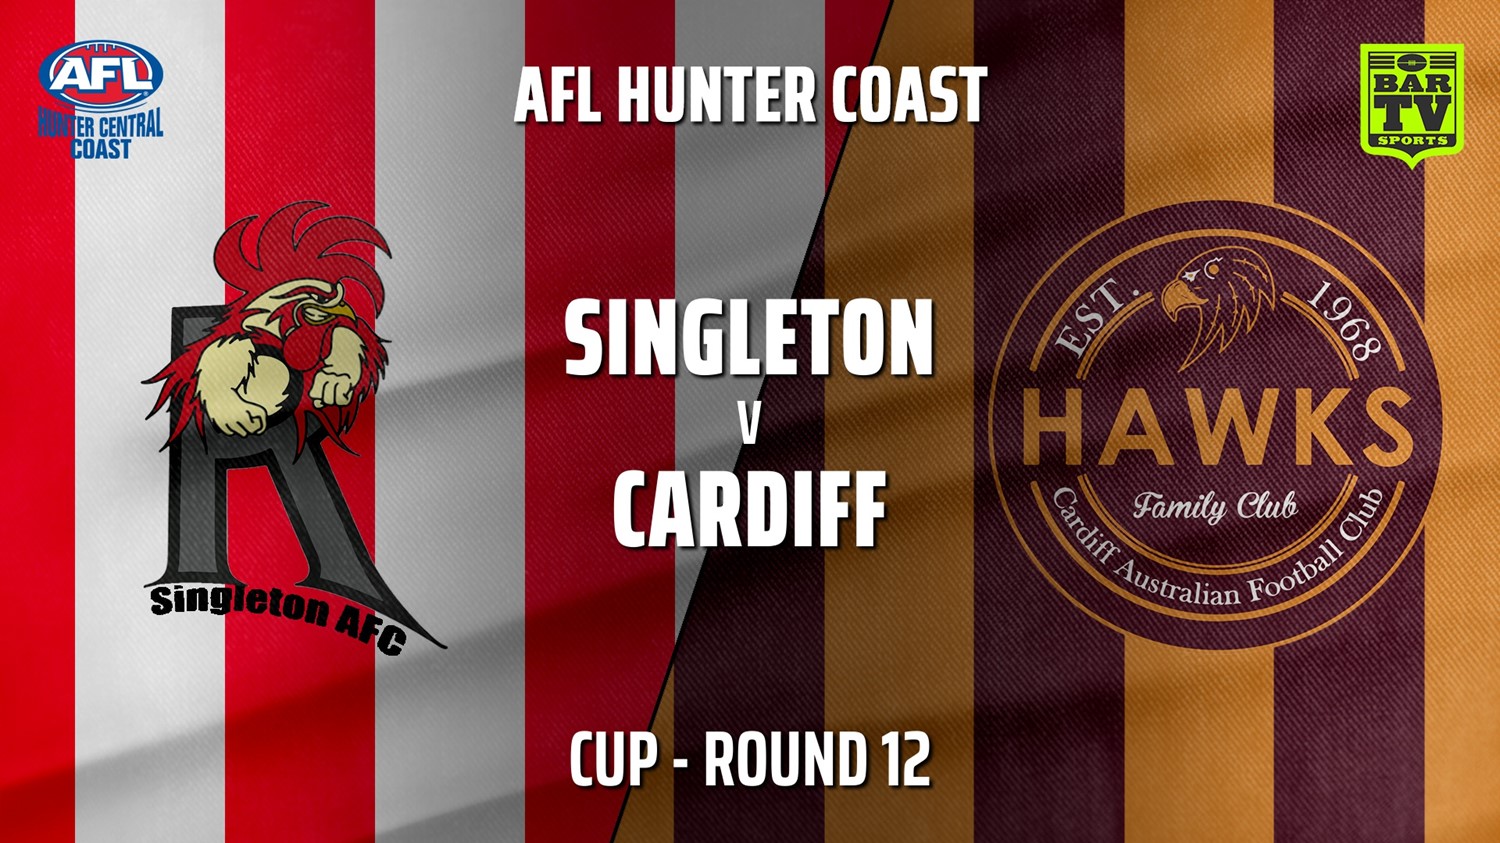 210710-AFL Hunter Central Coast Round 12 - Cup - Singleton Roosters v Cardiff Hawks Slate Image